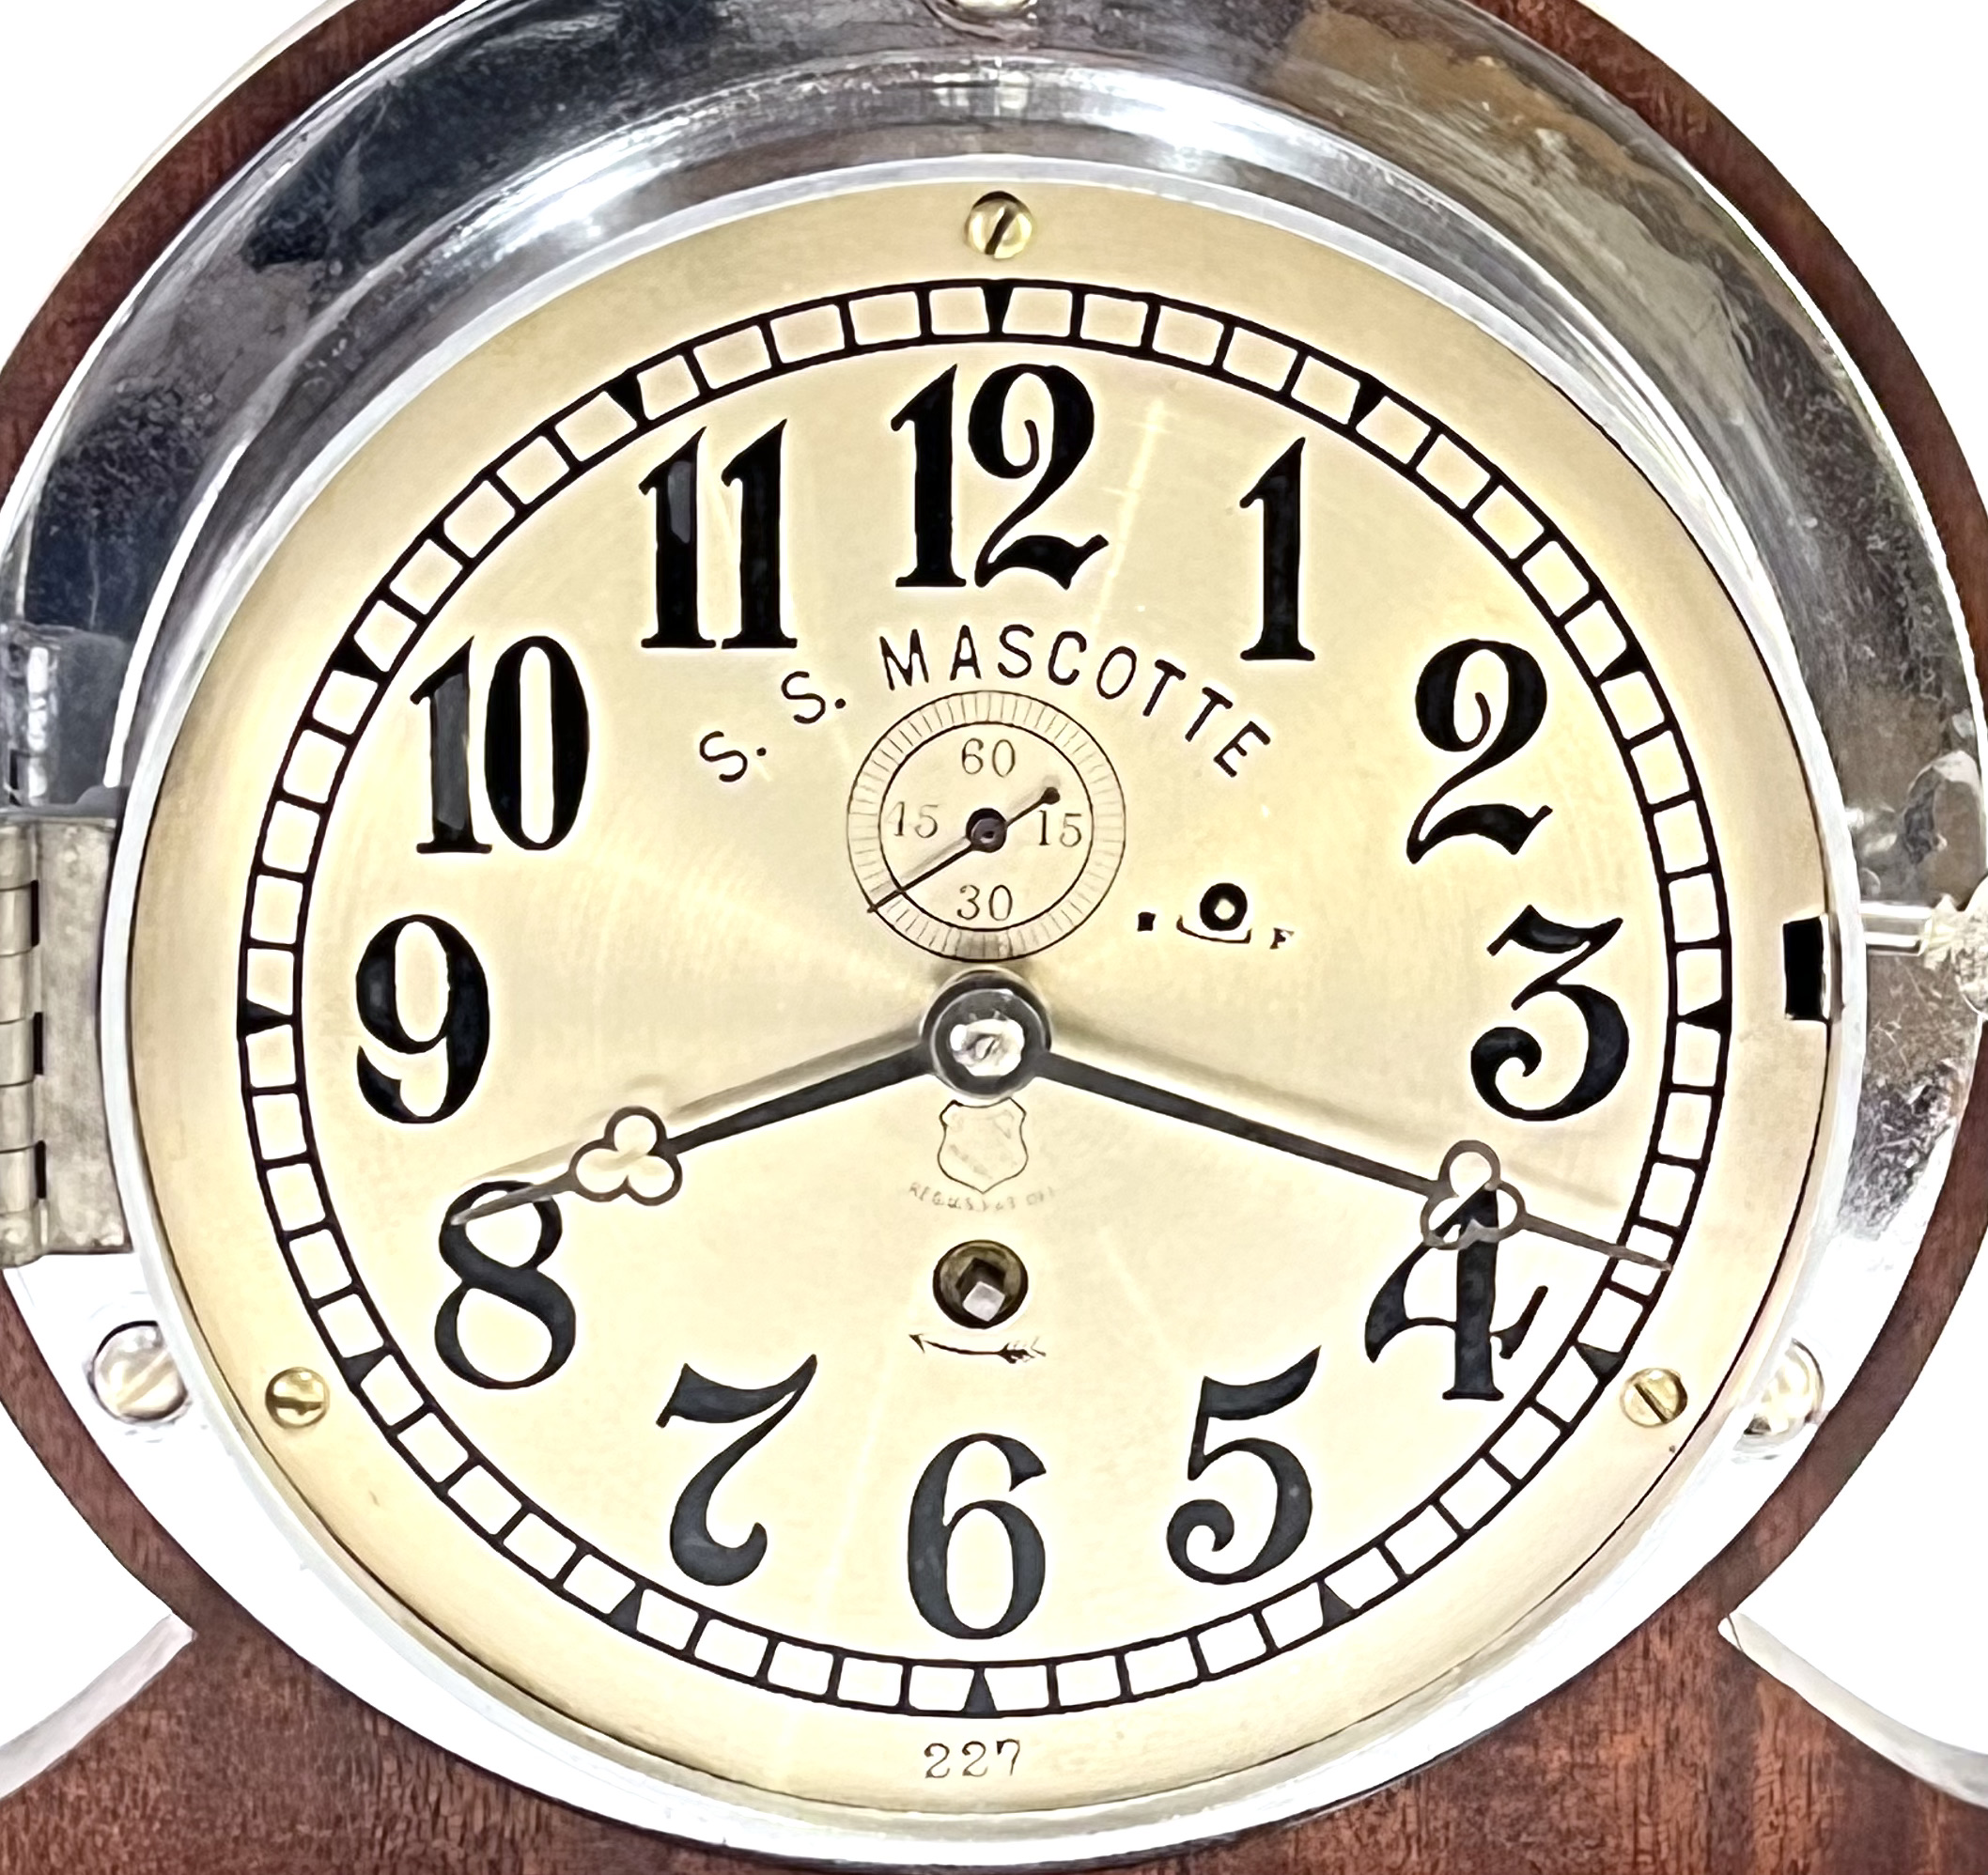 Harvard Clock Co. 6 inch Marine Clock for the SS Mascotte